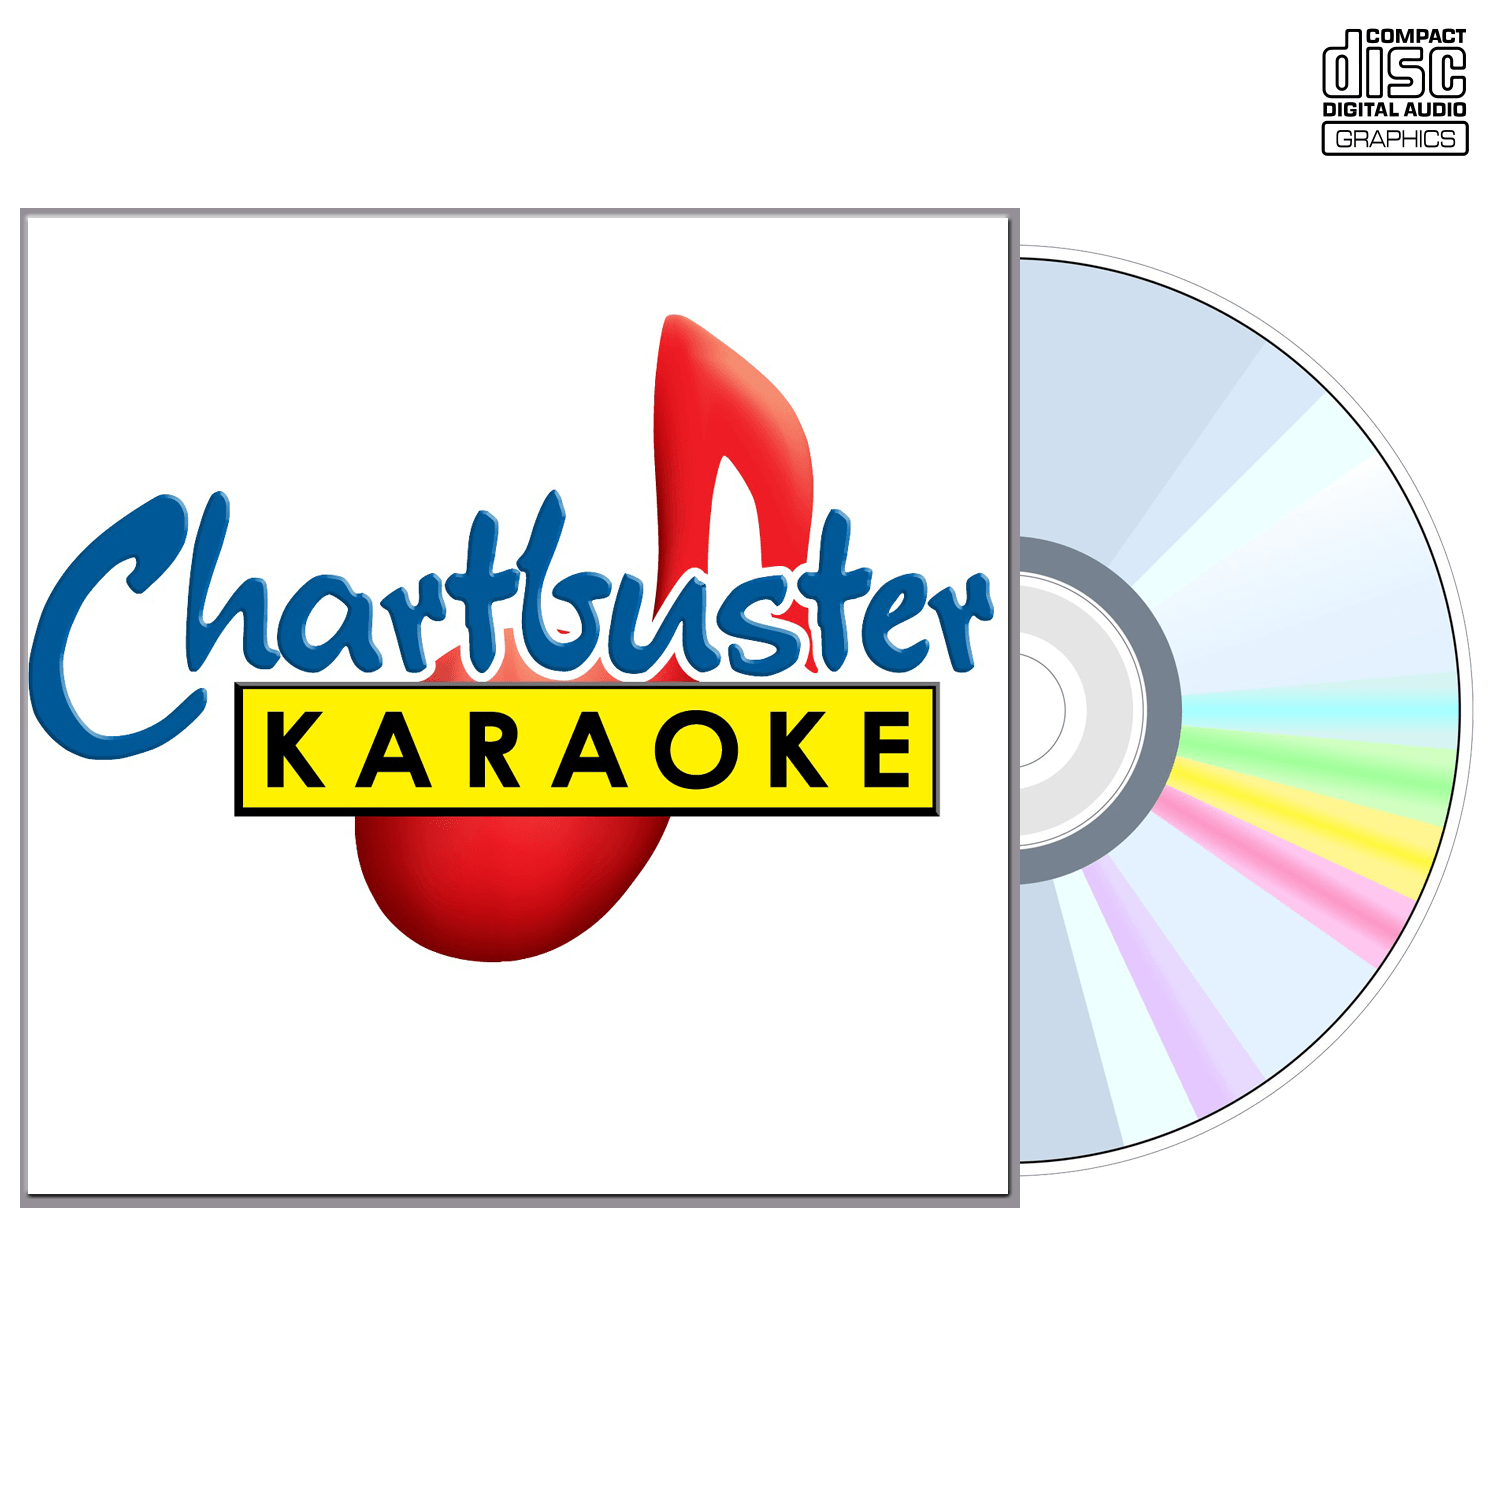 Country Men Vol 05 - CD+G - Chartbuster Karaoke - Karaoke Home Entertainment